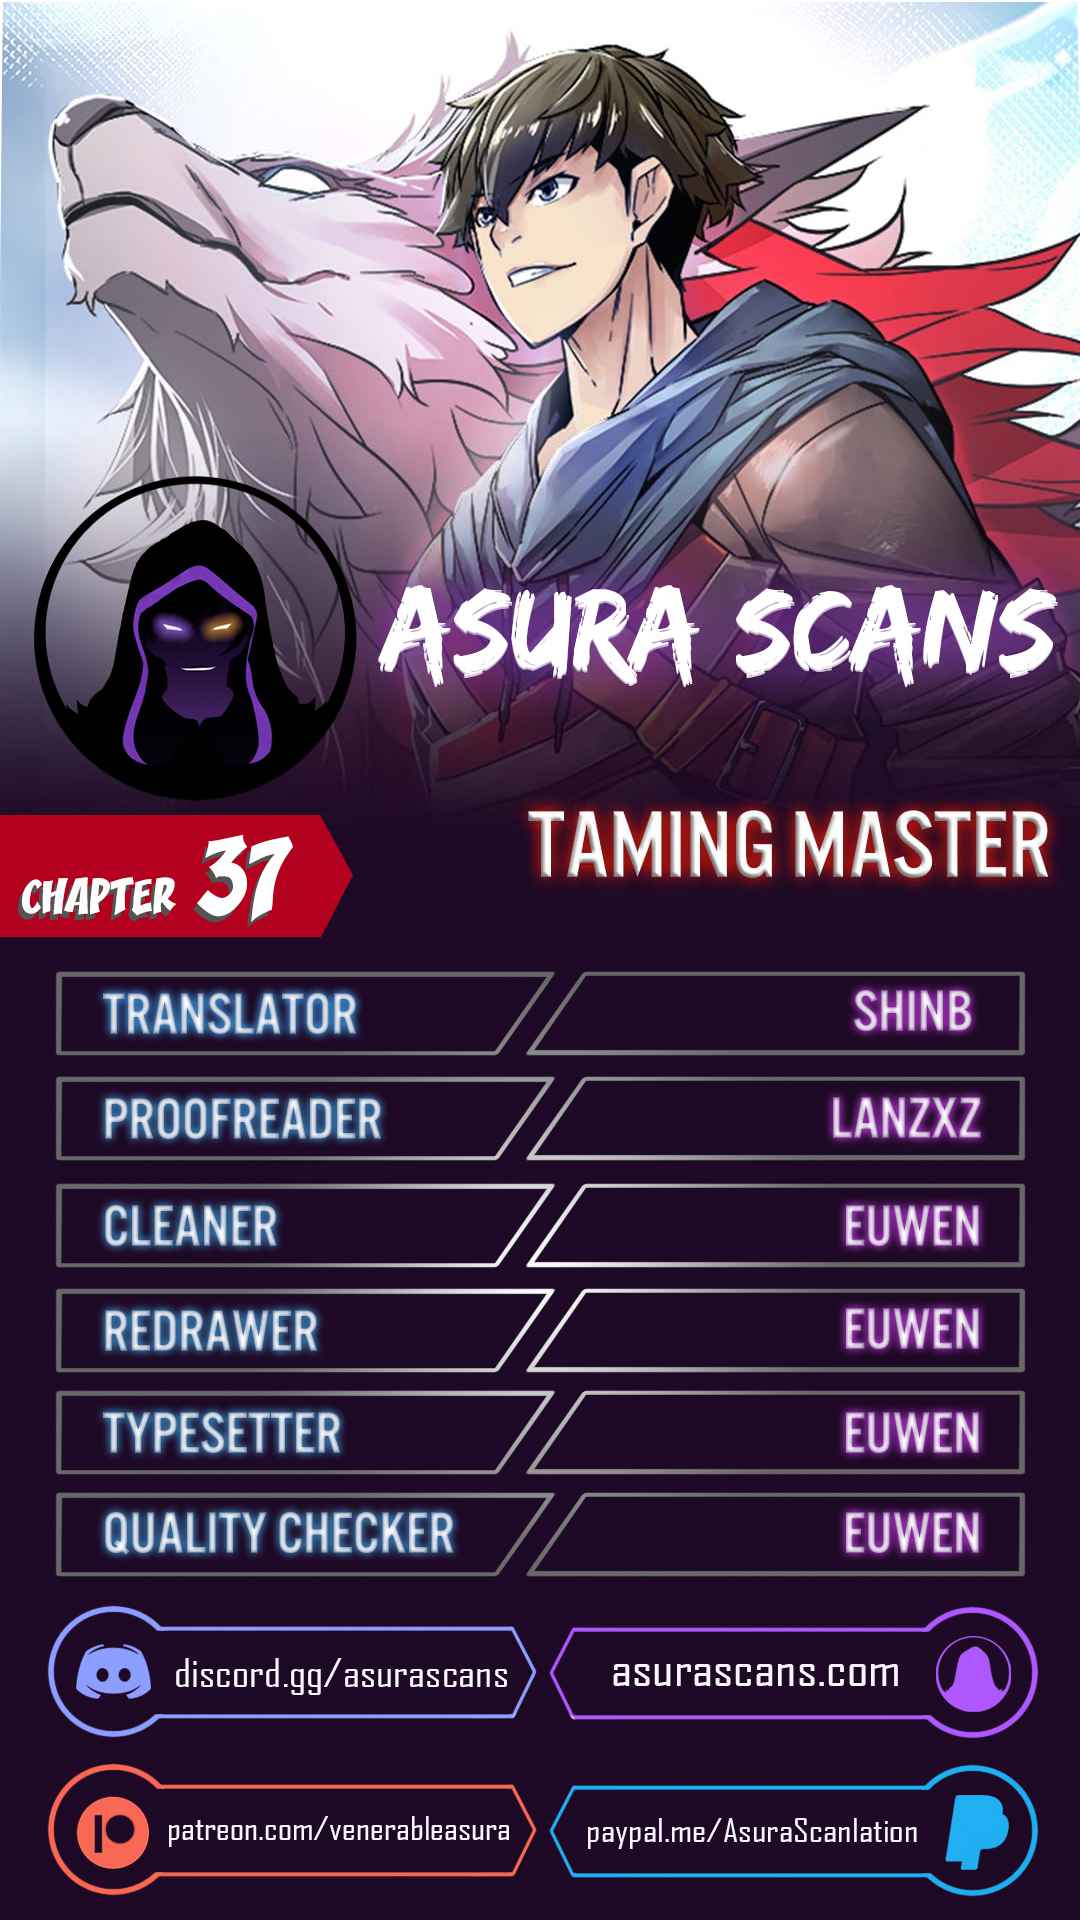 Taming Master 37 (1)